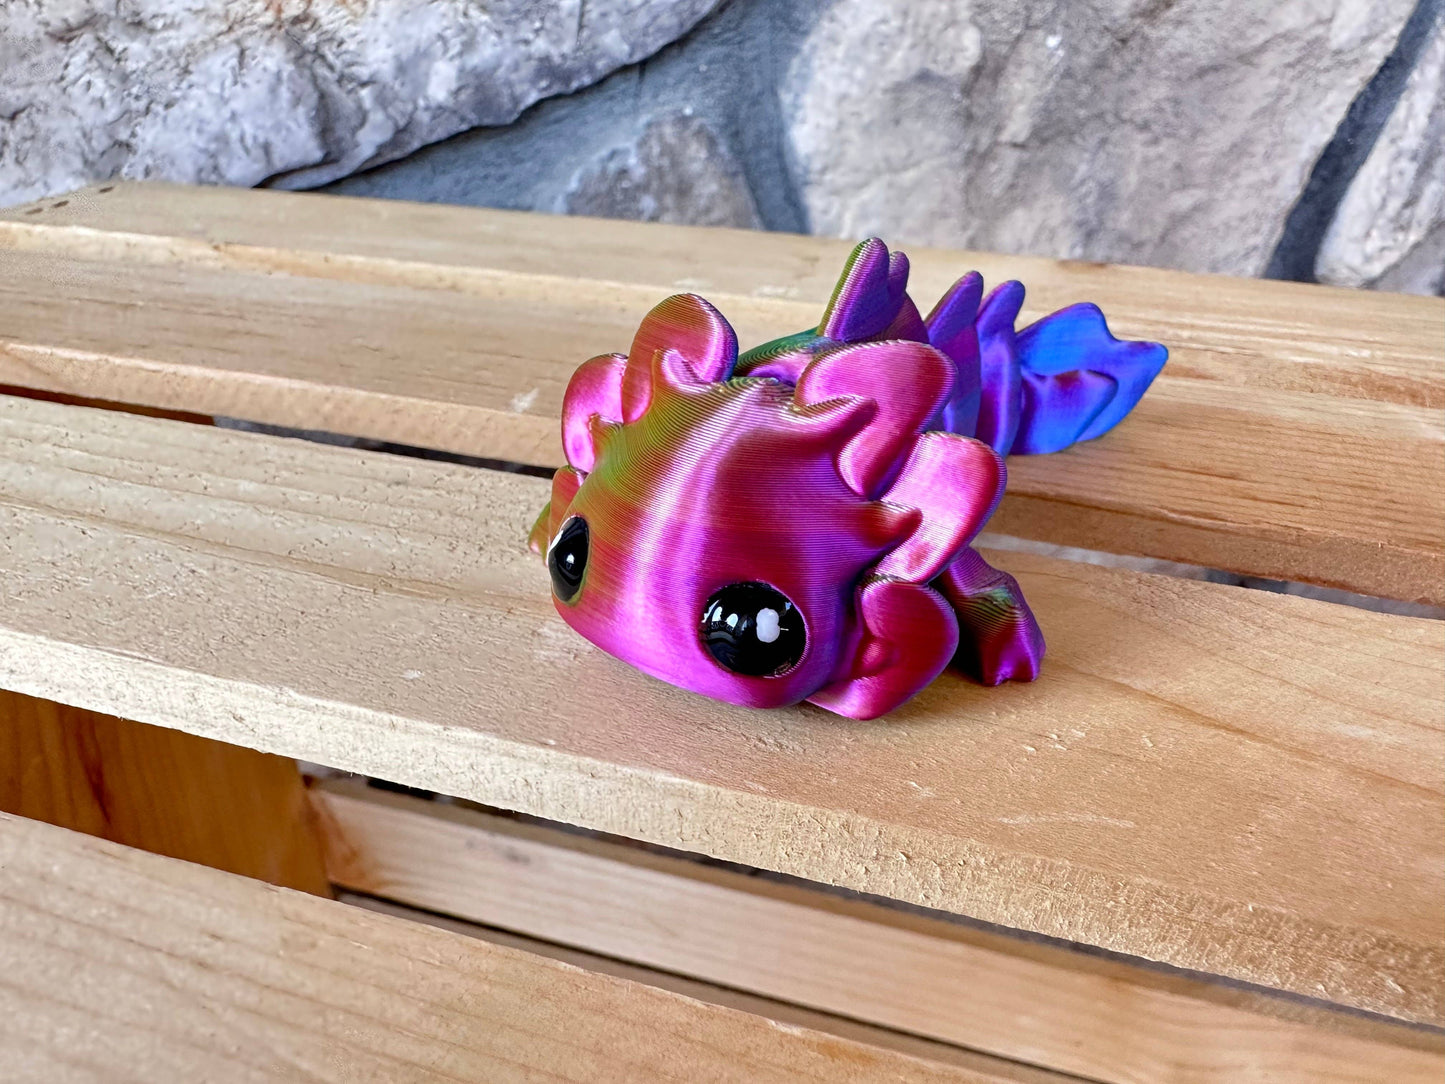 3D Printed Axolotl Tadpole: Large